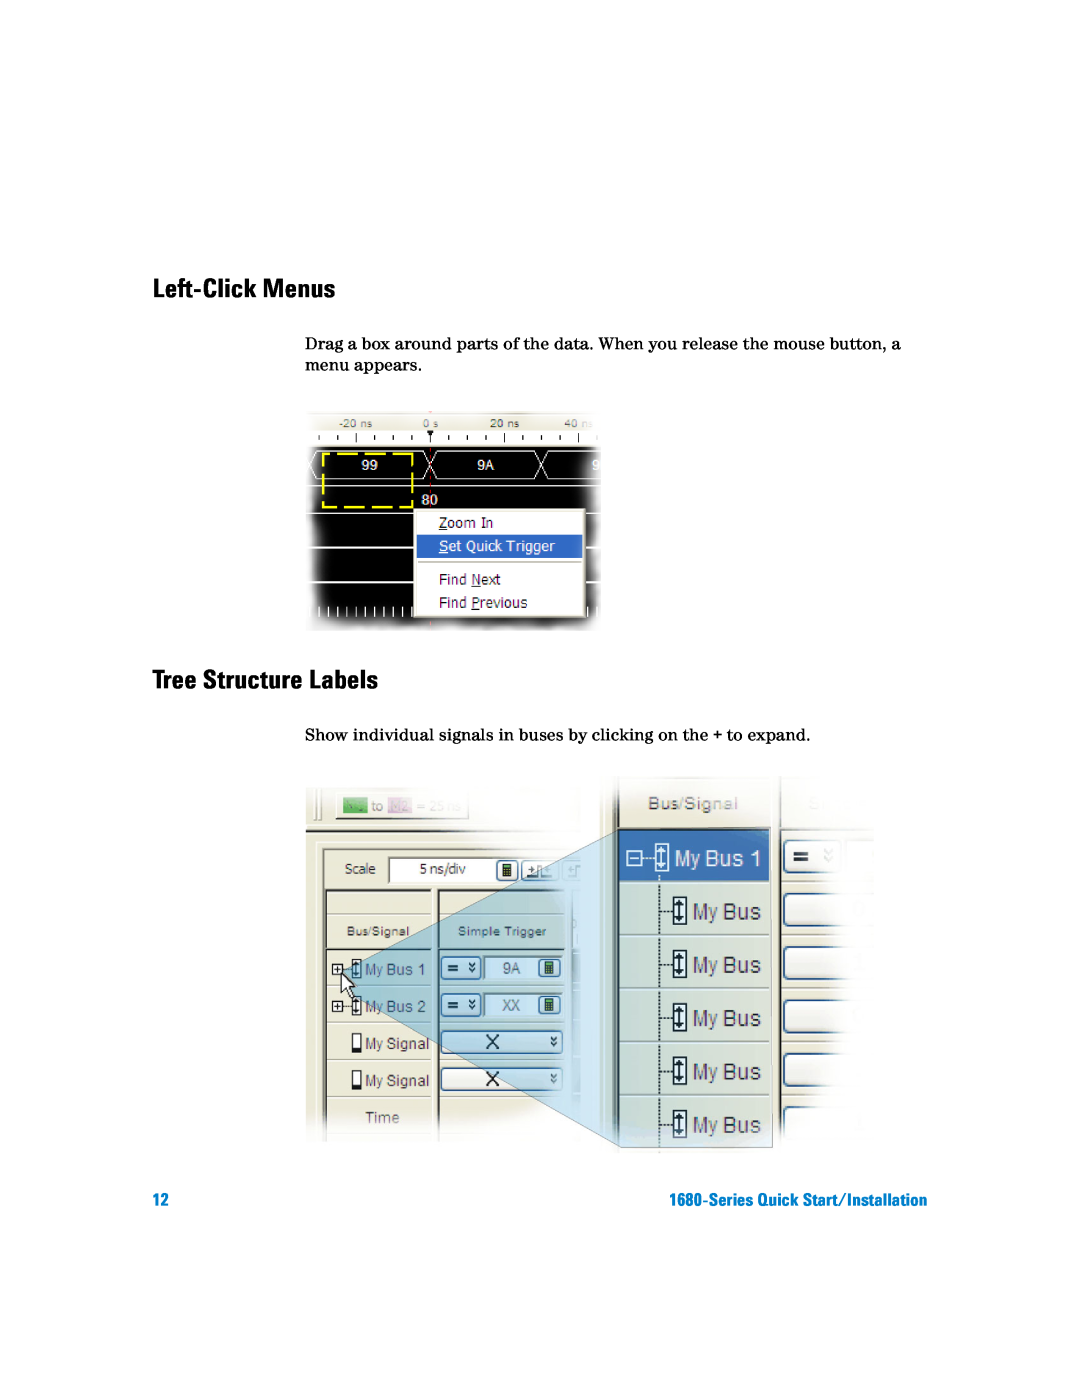 Agilent Technologies 1680 quick start Left-Click Menus, Tree Structure Labels, Series Quick Start/Installation 